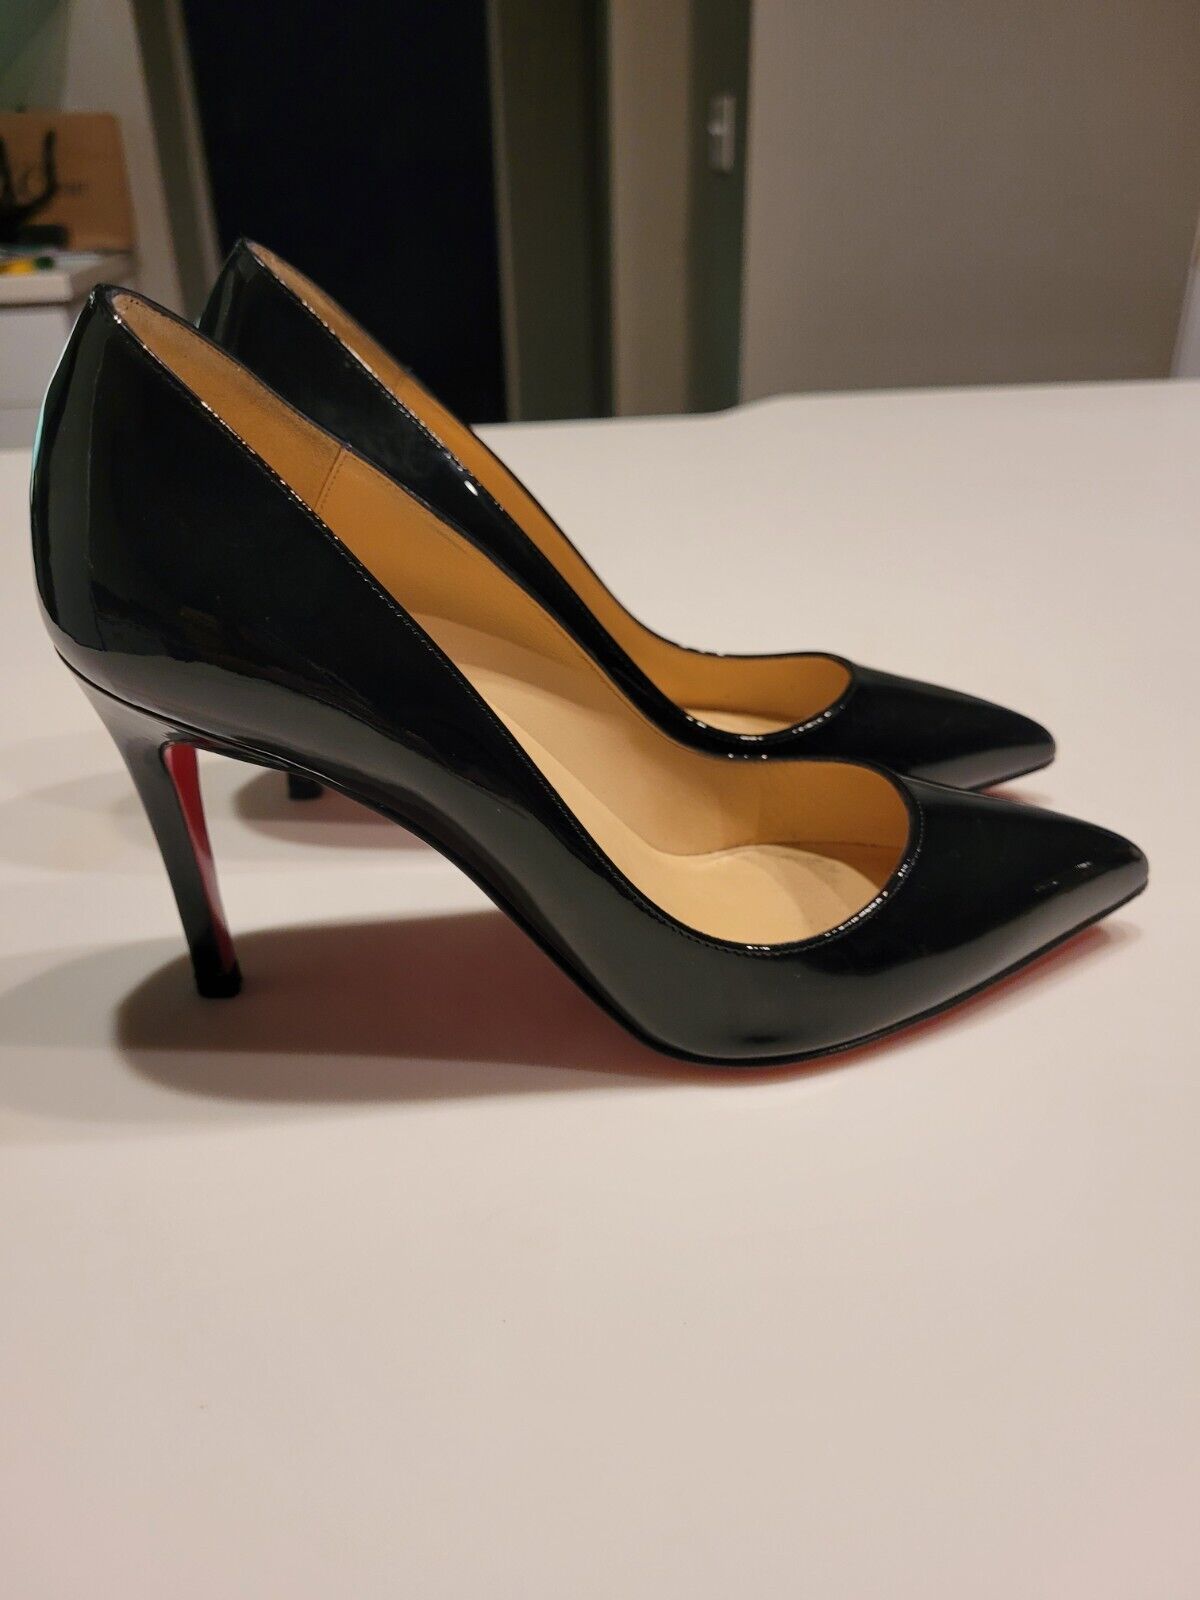 Christain Louboutin so kate black patent 85 heels EUC Authentic pigalle sz 37